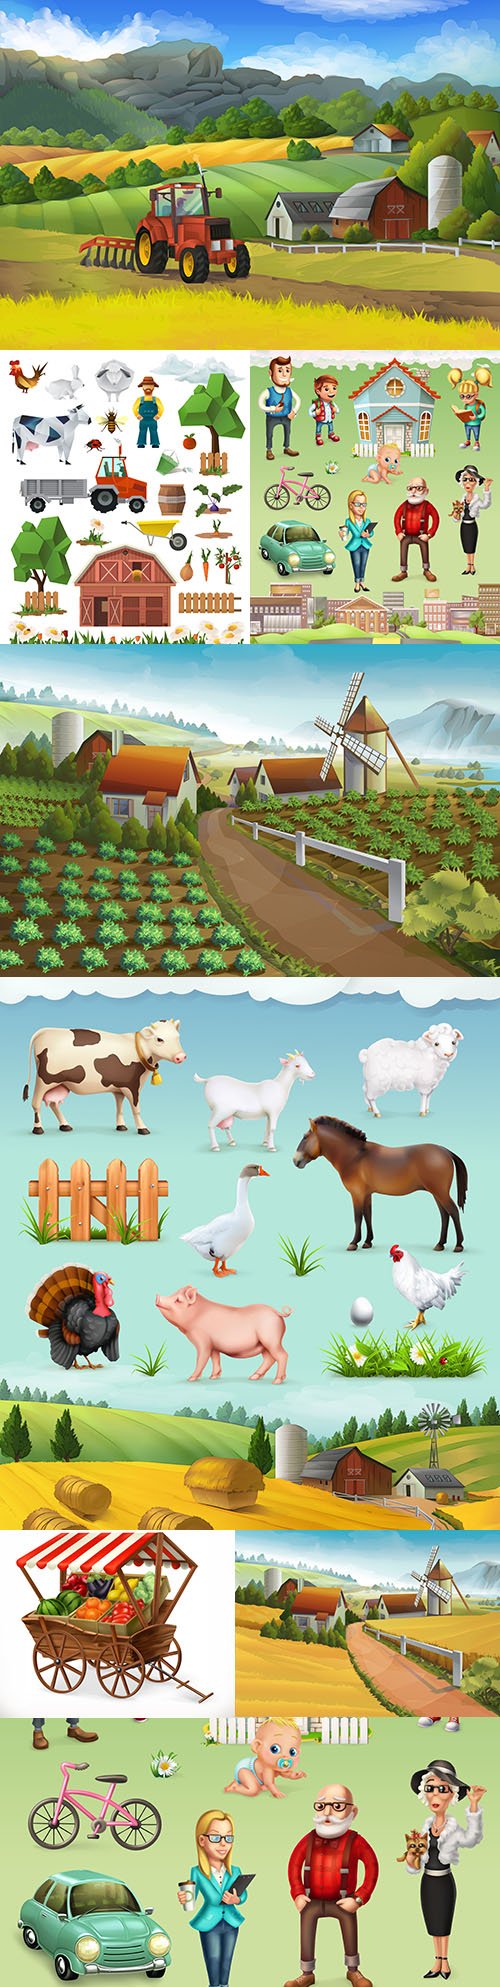 Farm and animal rural landscape vector illustrations